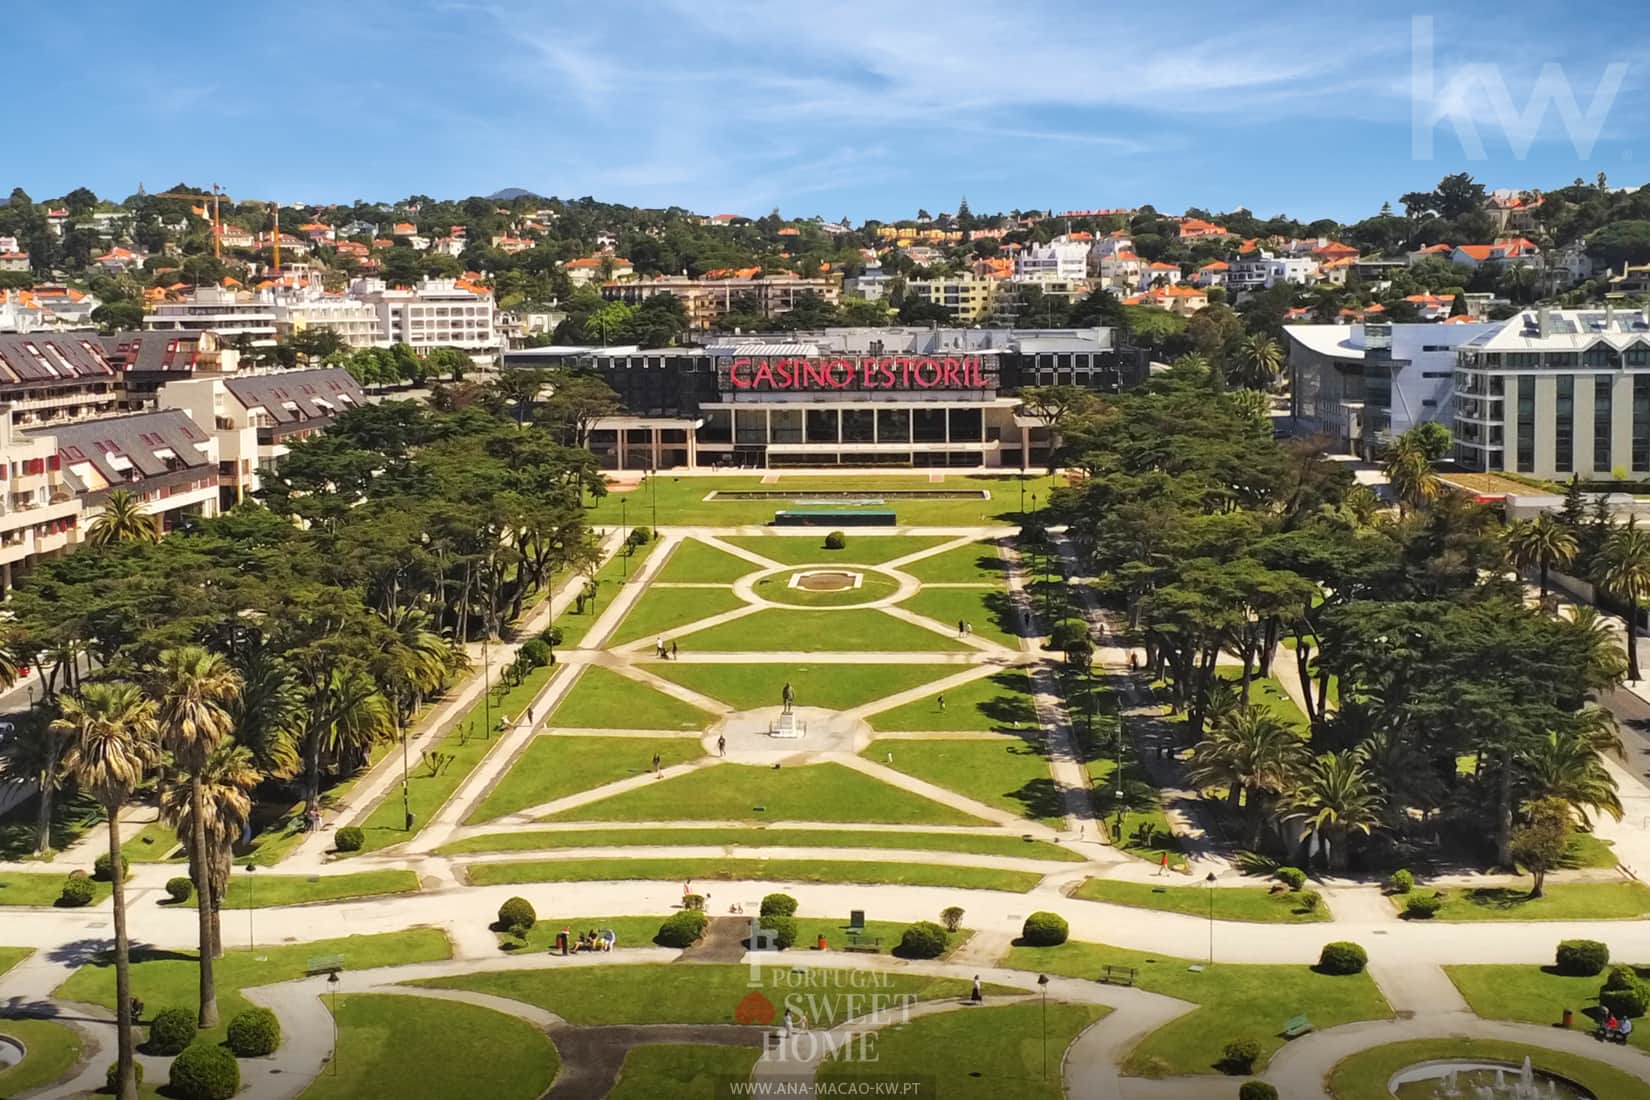 View of Casino Estoril, located nearby